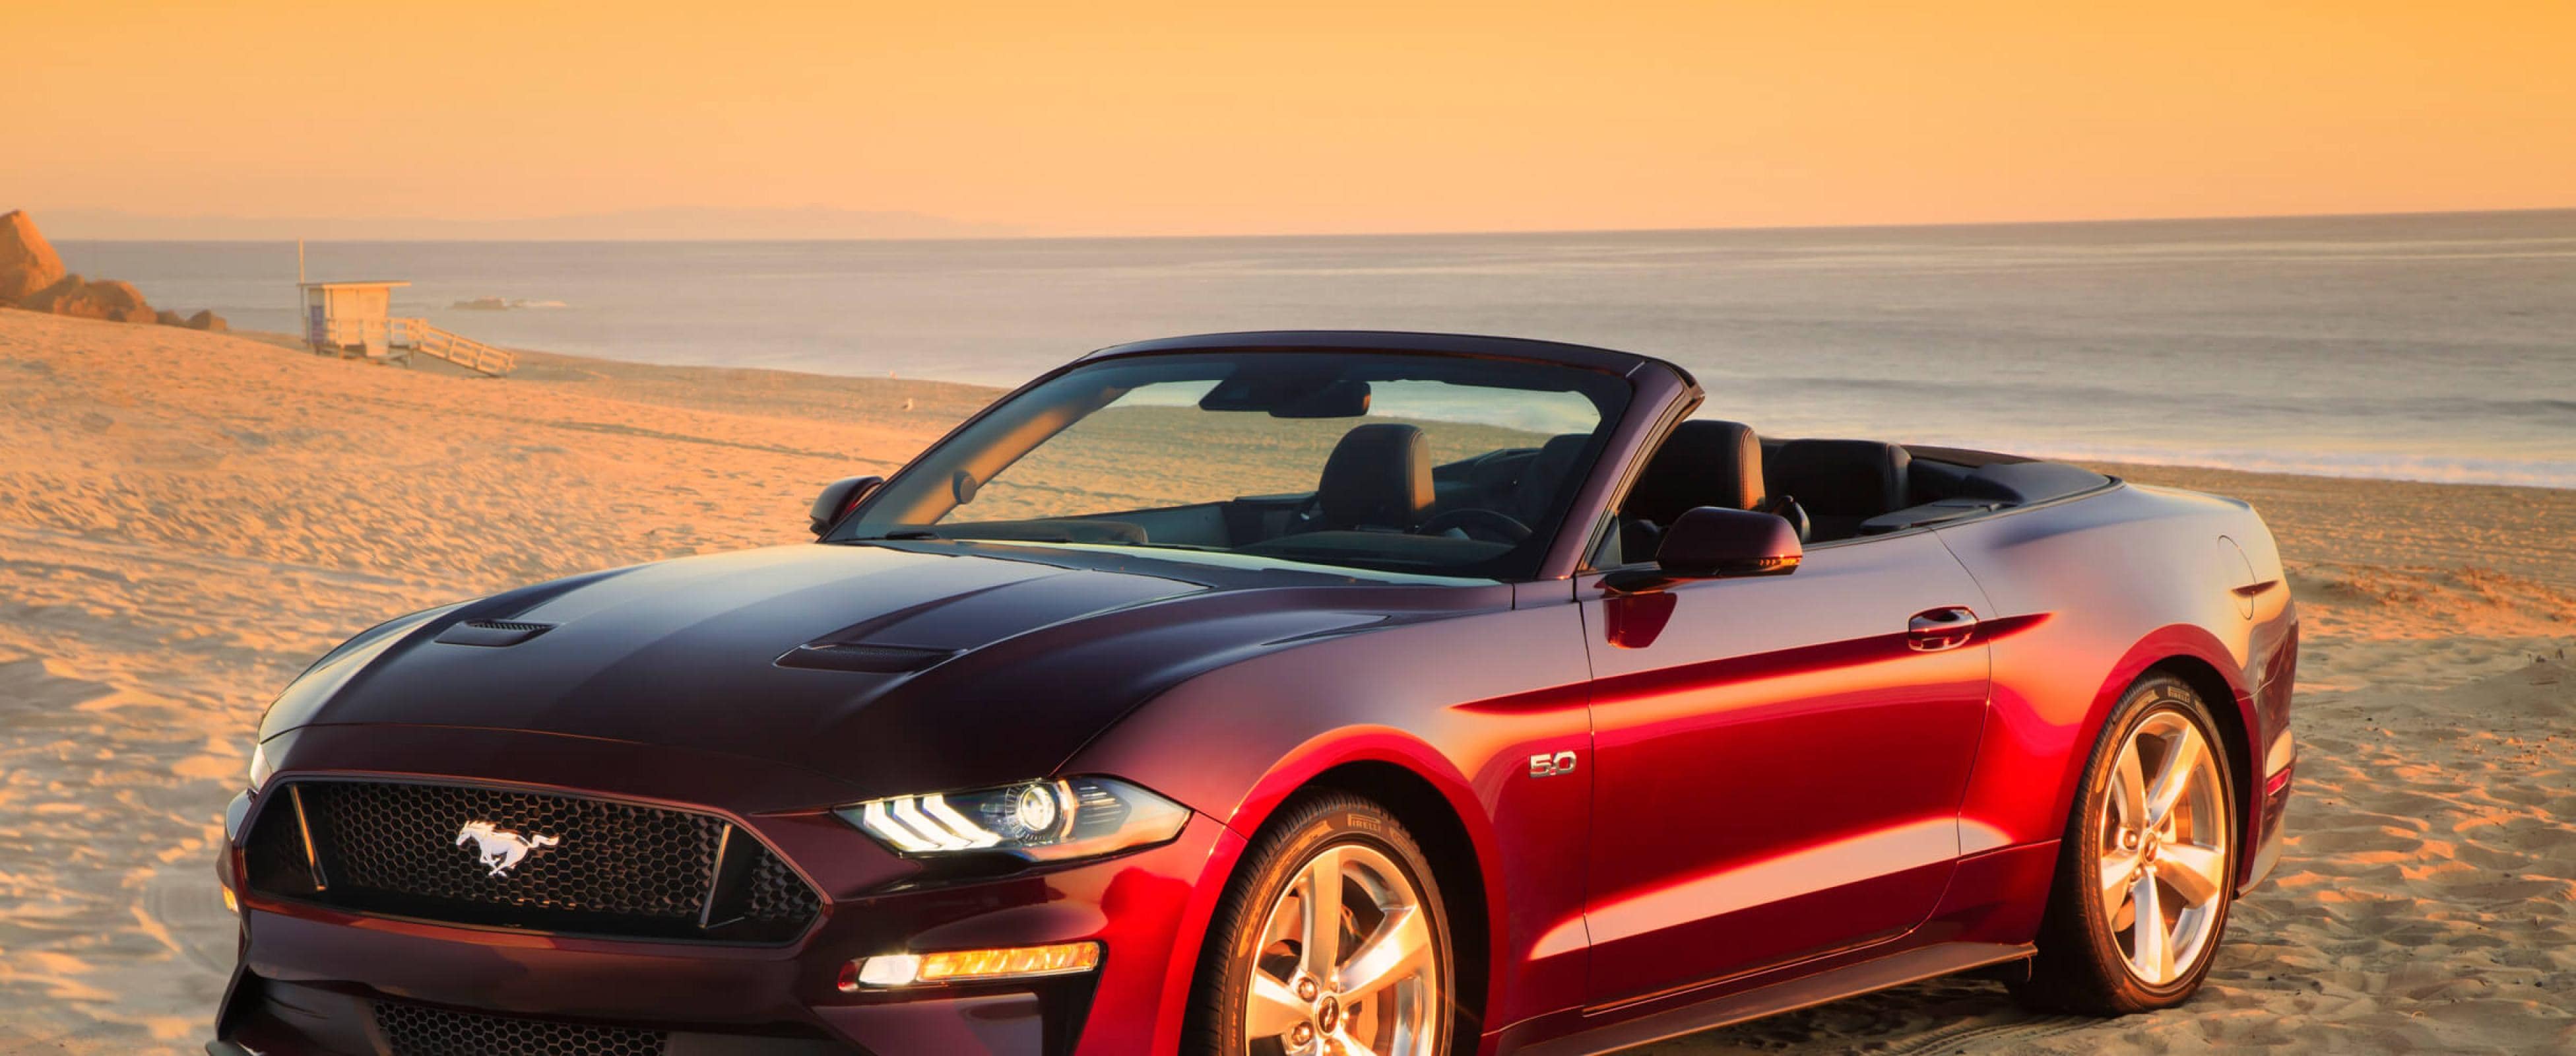 Car Rental Mustang Convertible Los Angeles | Convertible Cars